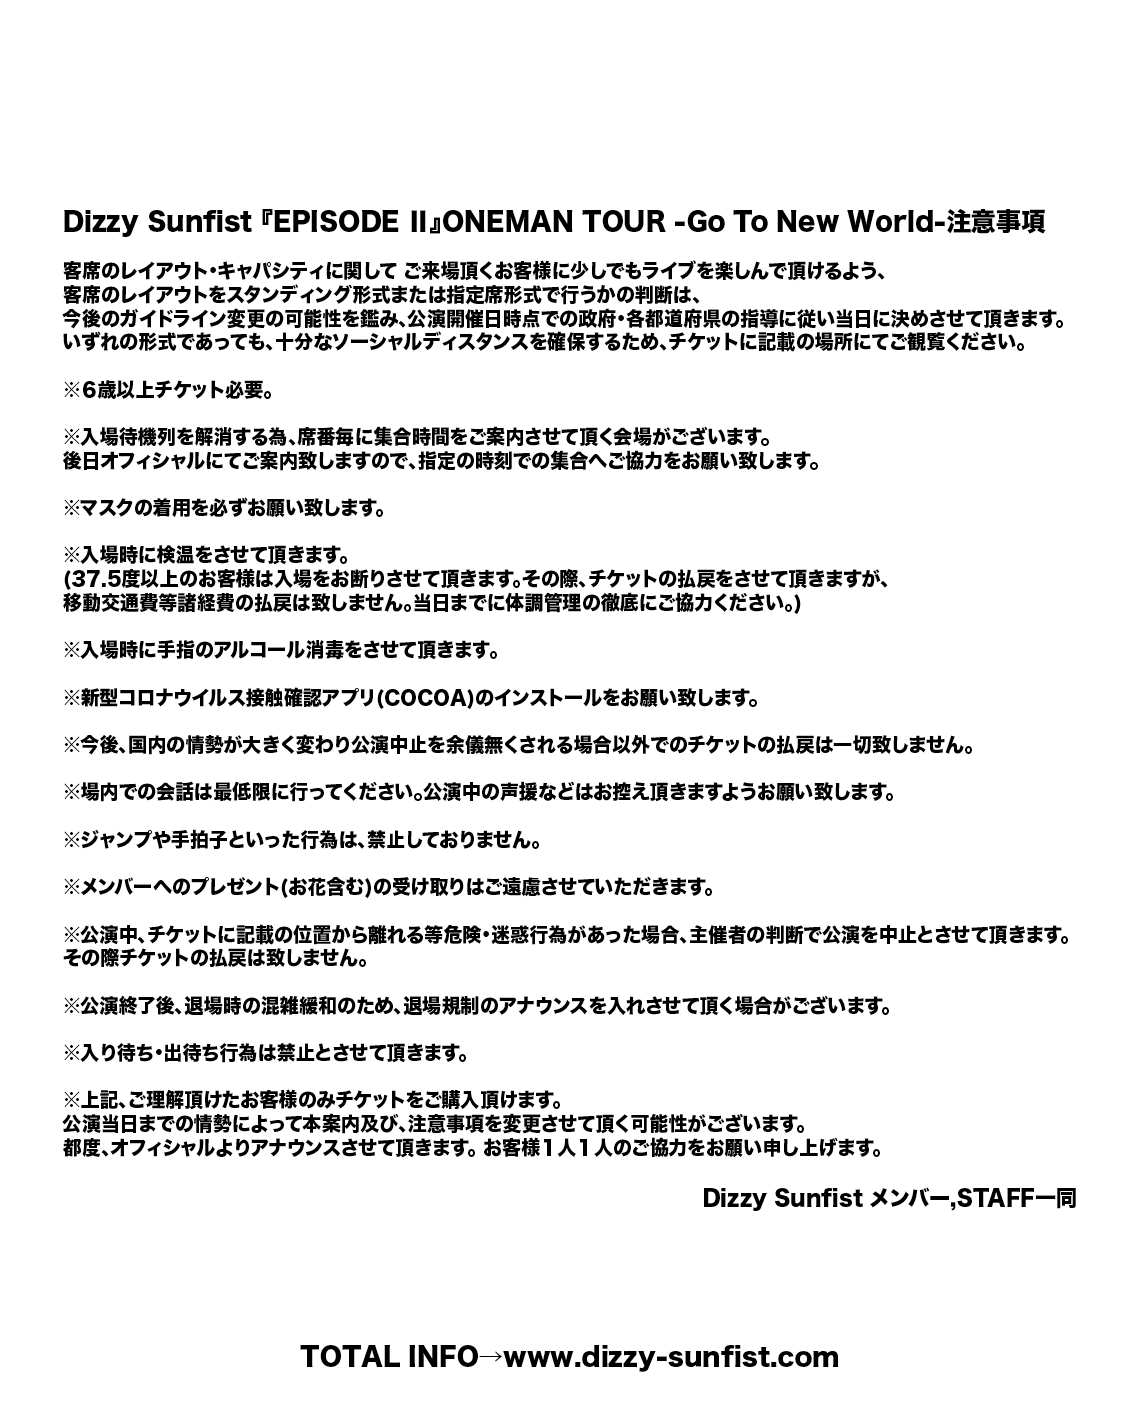 Dizzy Sunfist Episode Oneman Tour Go To New World 10 10 Sat 渋谷公演 12 25 Fri 金沢公演 チケット一般発売 Dizzy Sunfist Official Web Site